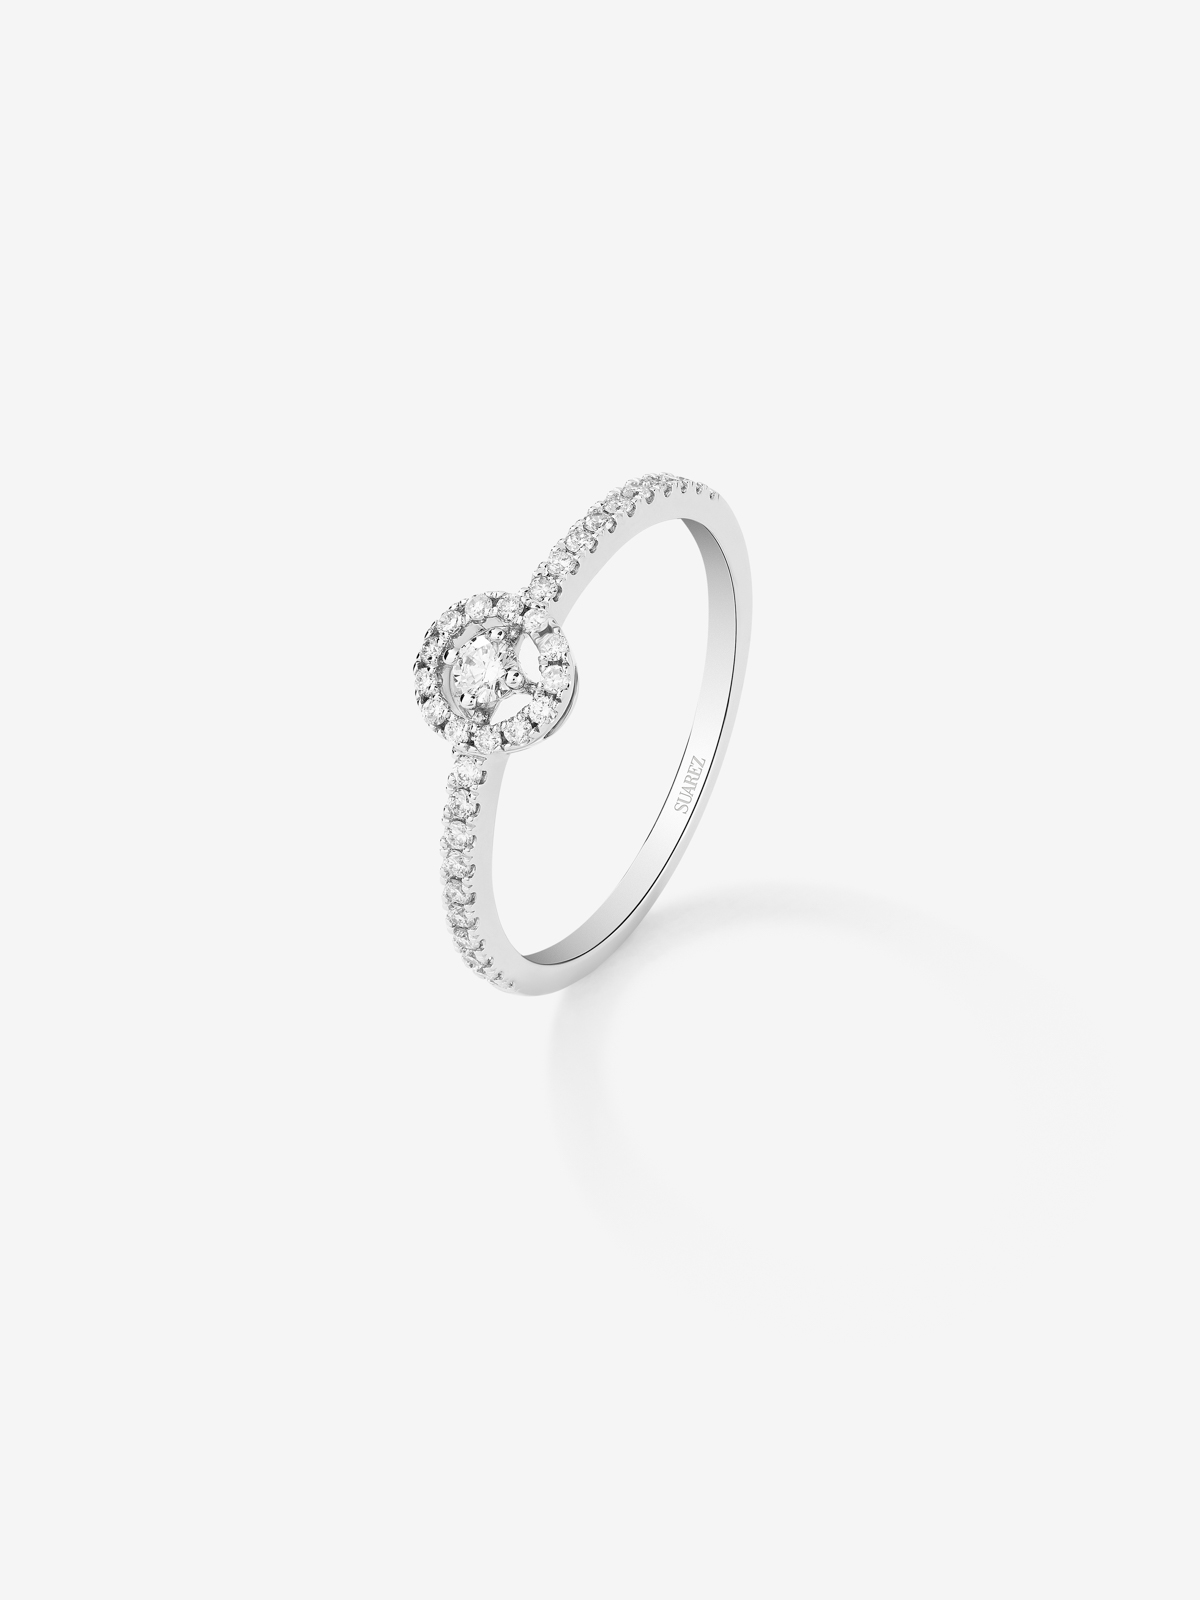 18K White Gold Halo Ring with Diamond